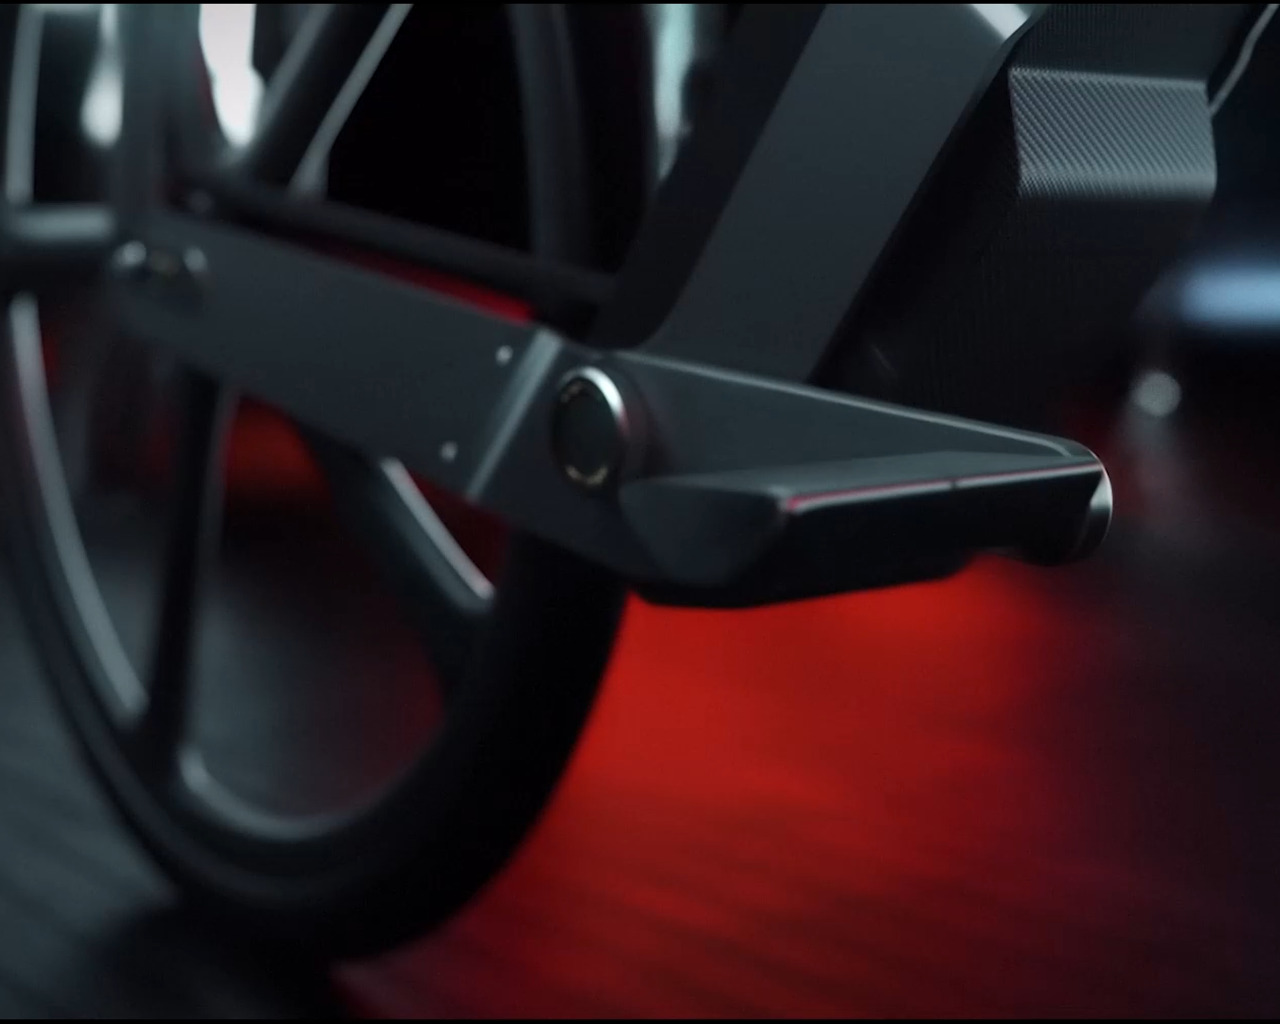 A bike - 3D Commercial Project